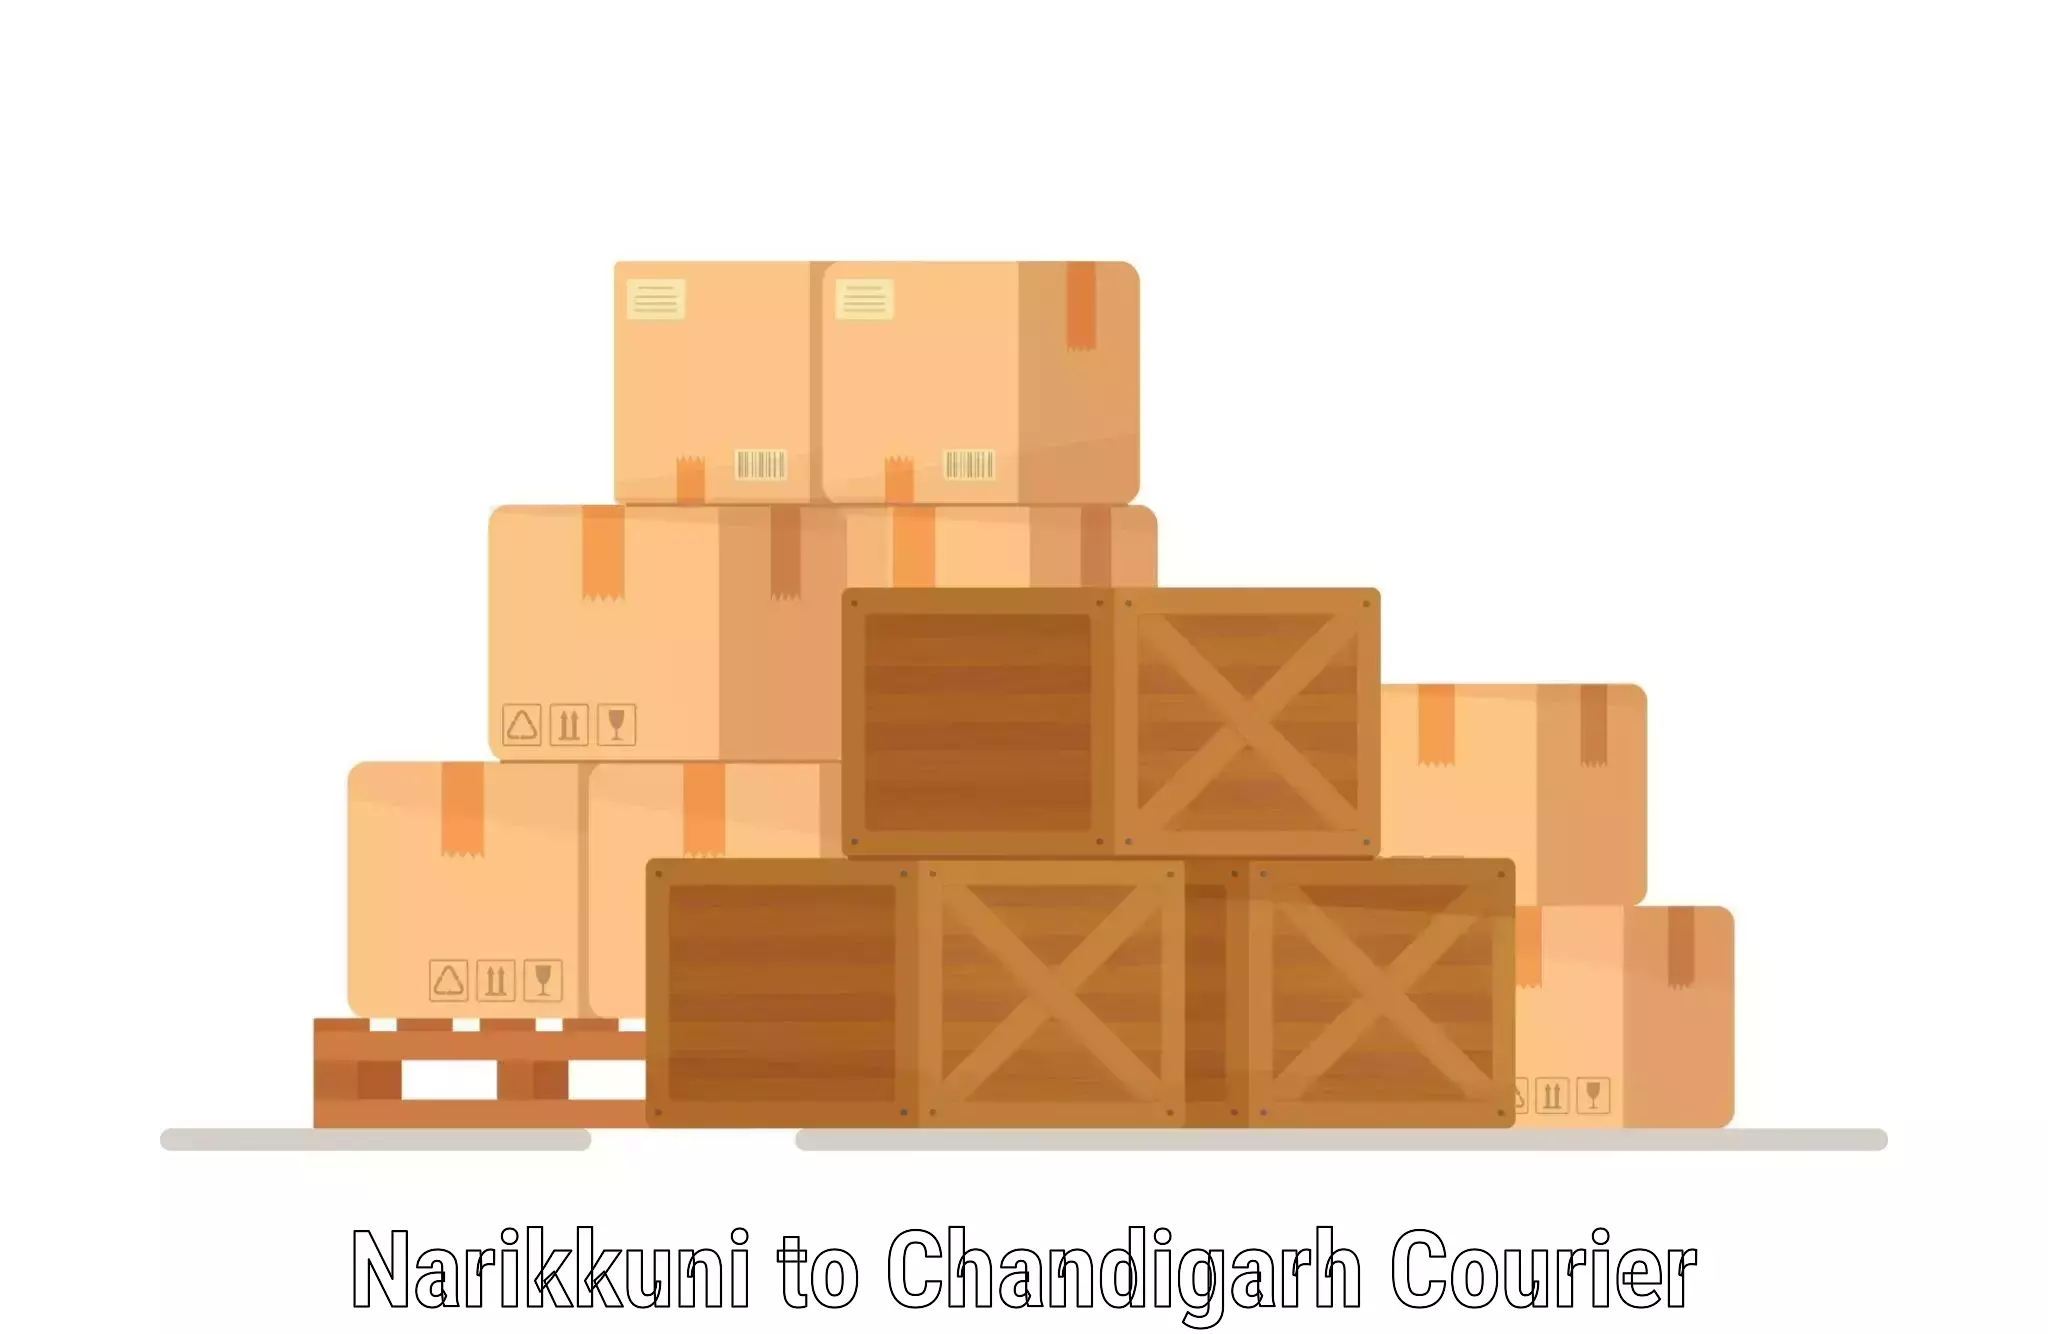 State-of-the-art courier technology Narikkuni to Chandigarh